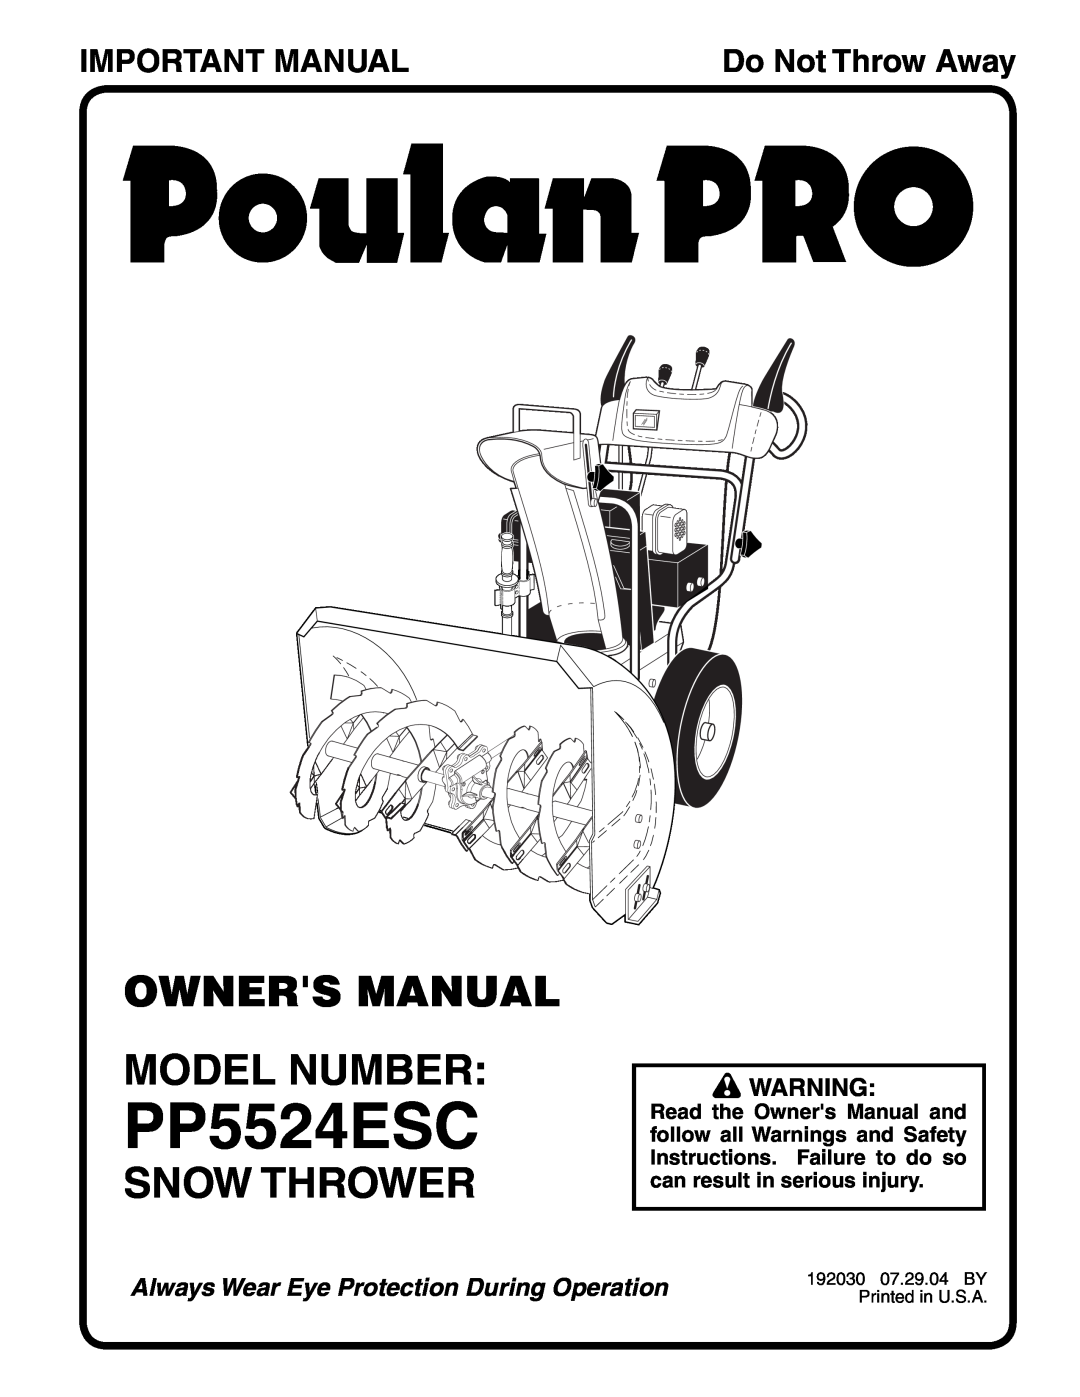 Poulan 192030 owner manual Snow Thrower, Important Manual, PP5524ESC, Do Not Throw Away 